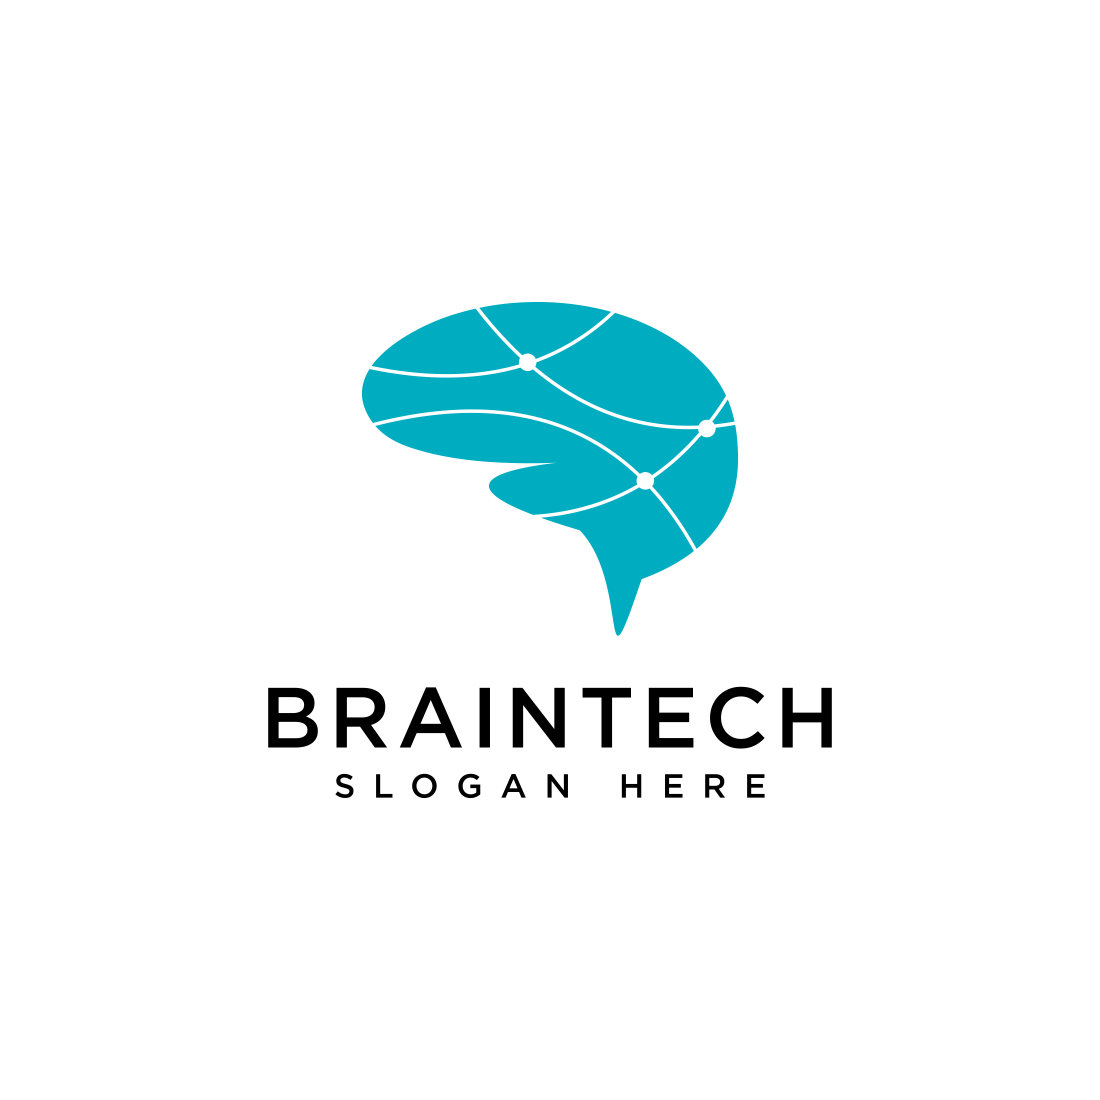 brain technology logo design vector preview image.